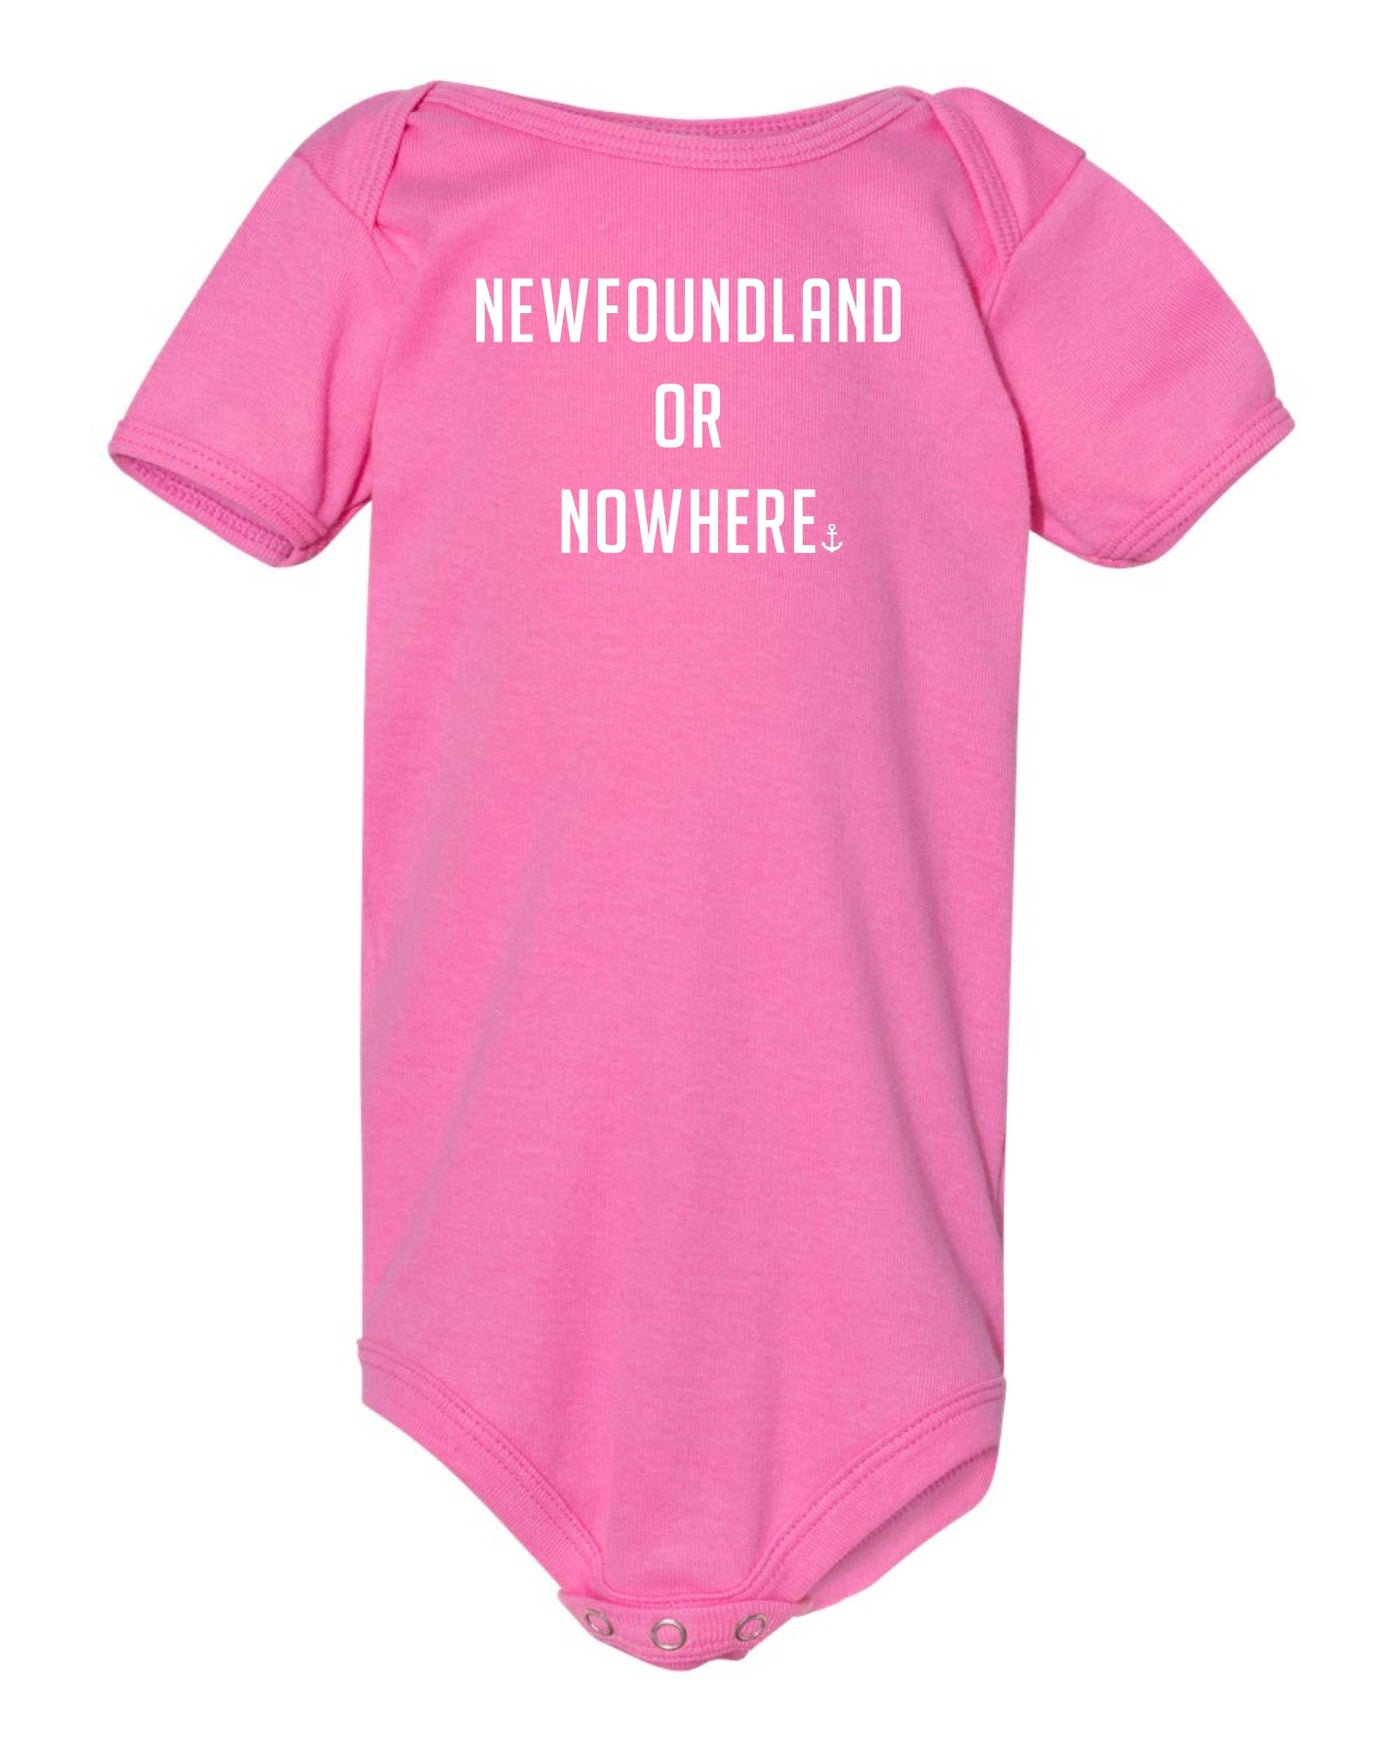 "Newfoundland Or Nowhere" Onesie